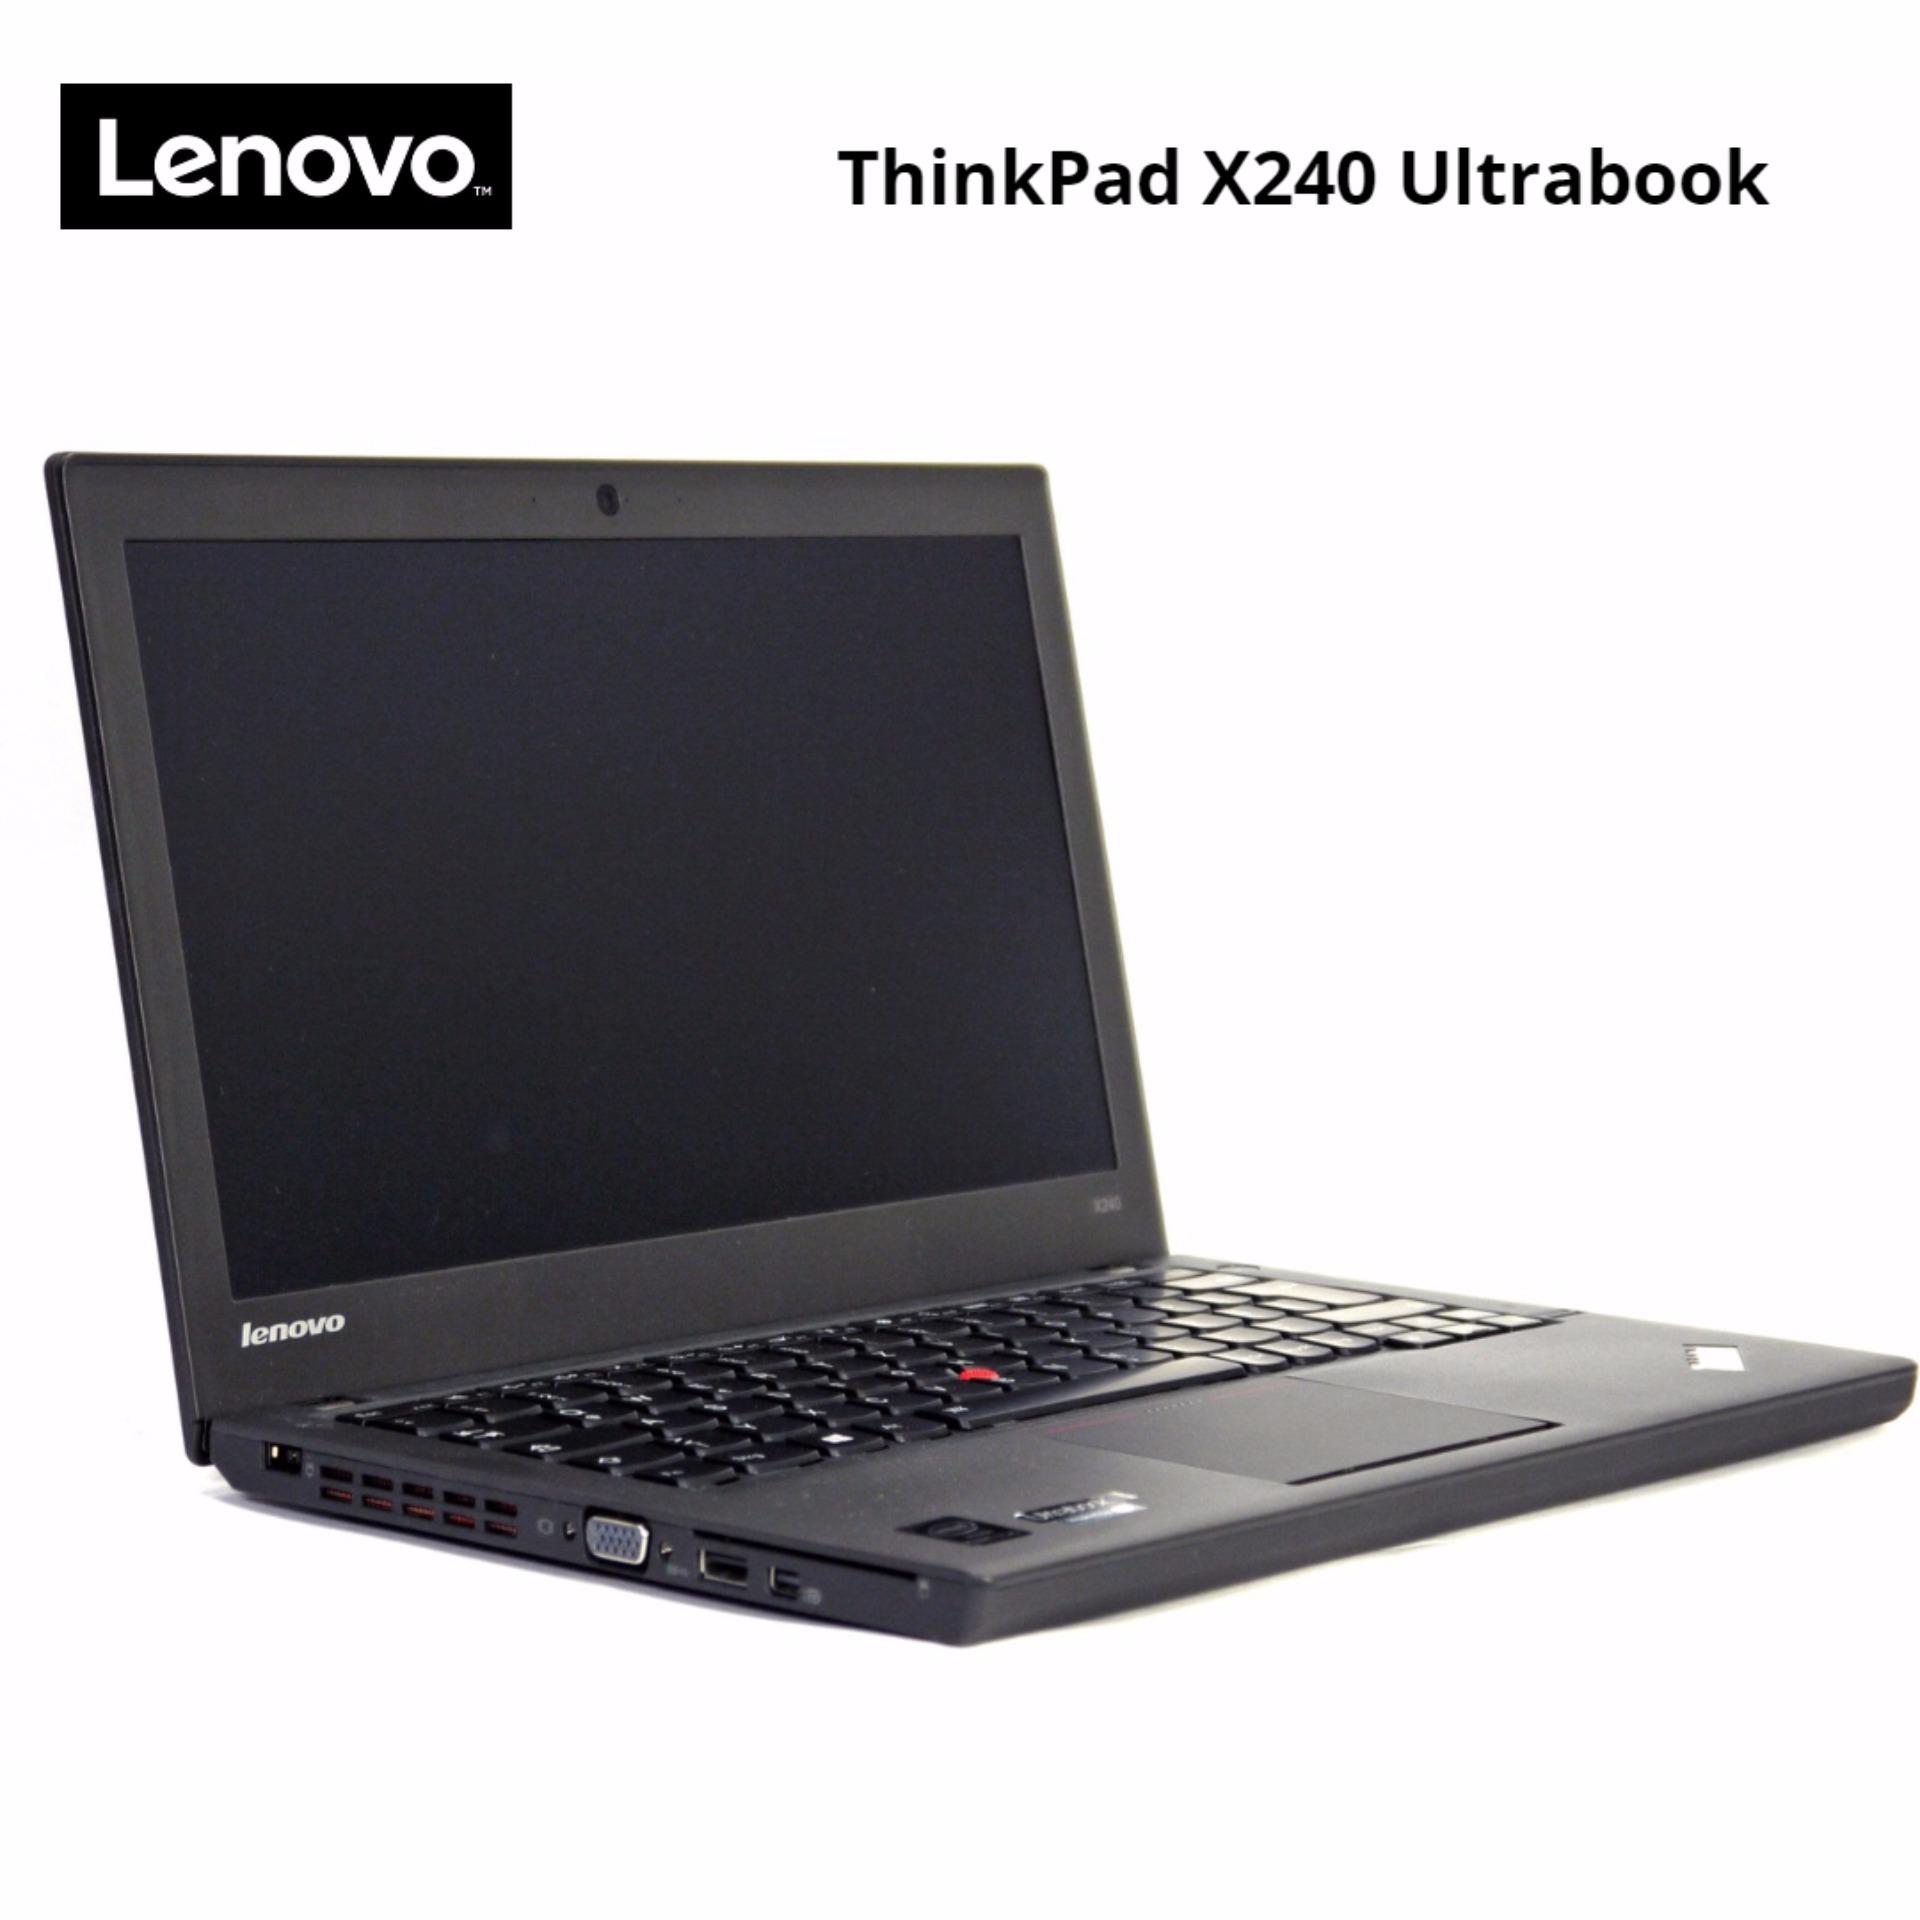 Lenovo ThinkPad X240 12.5 in LED Business Ultrabook i5-4300U@1.9Ghz 4GB RAM 320GB HDD WIN 10 Pro 30 days warranty